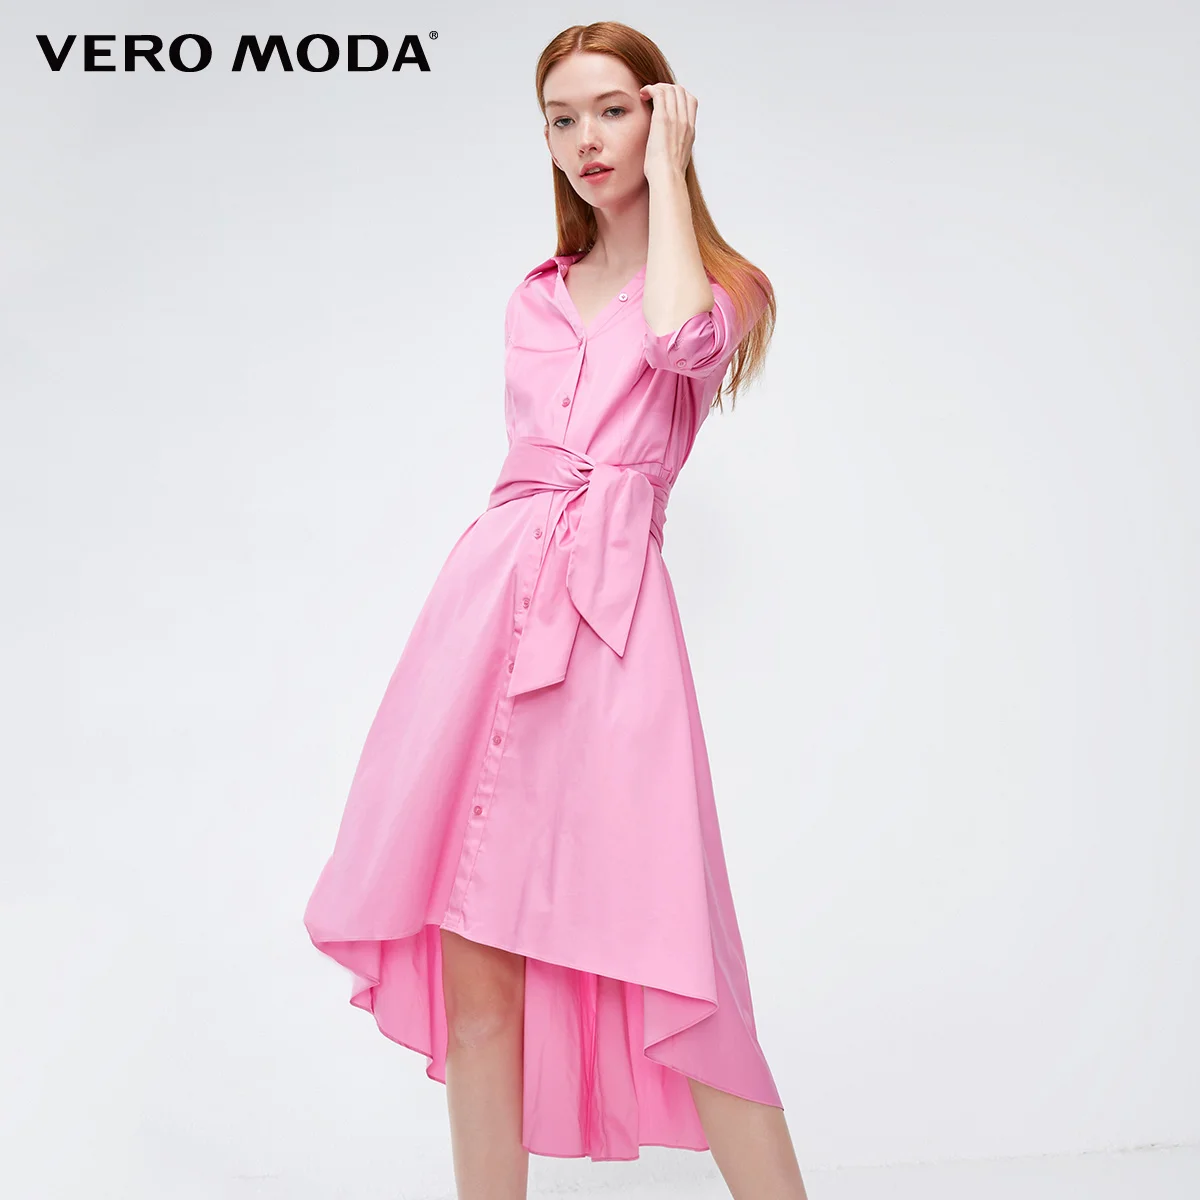 Vero Moda платье-рубашка с v-образным вырезом и рукавами три четверти | 31837C519 - Цвет: Fuchsia pink